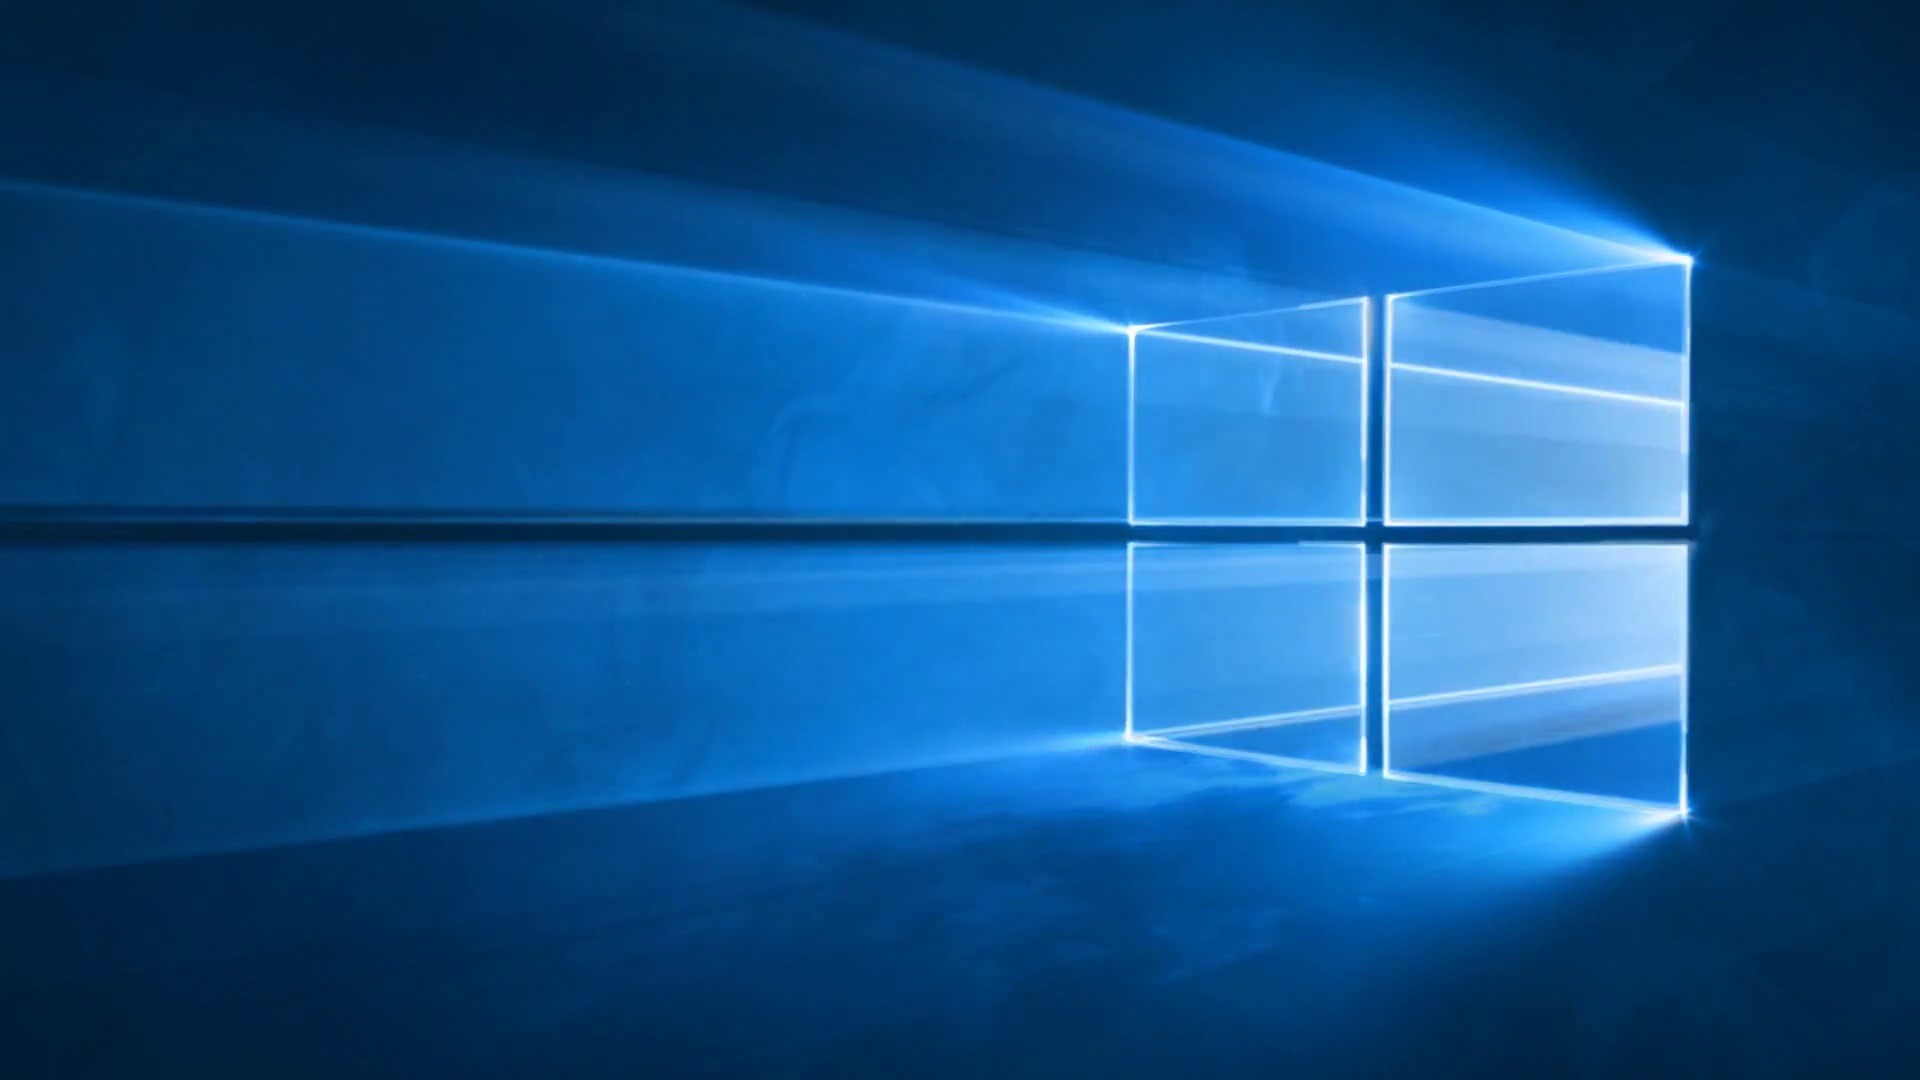 Microsoft Reveals the Official Windows 10 Wallpaper 1920x1080